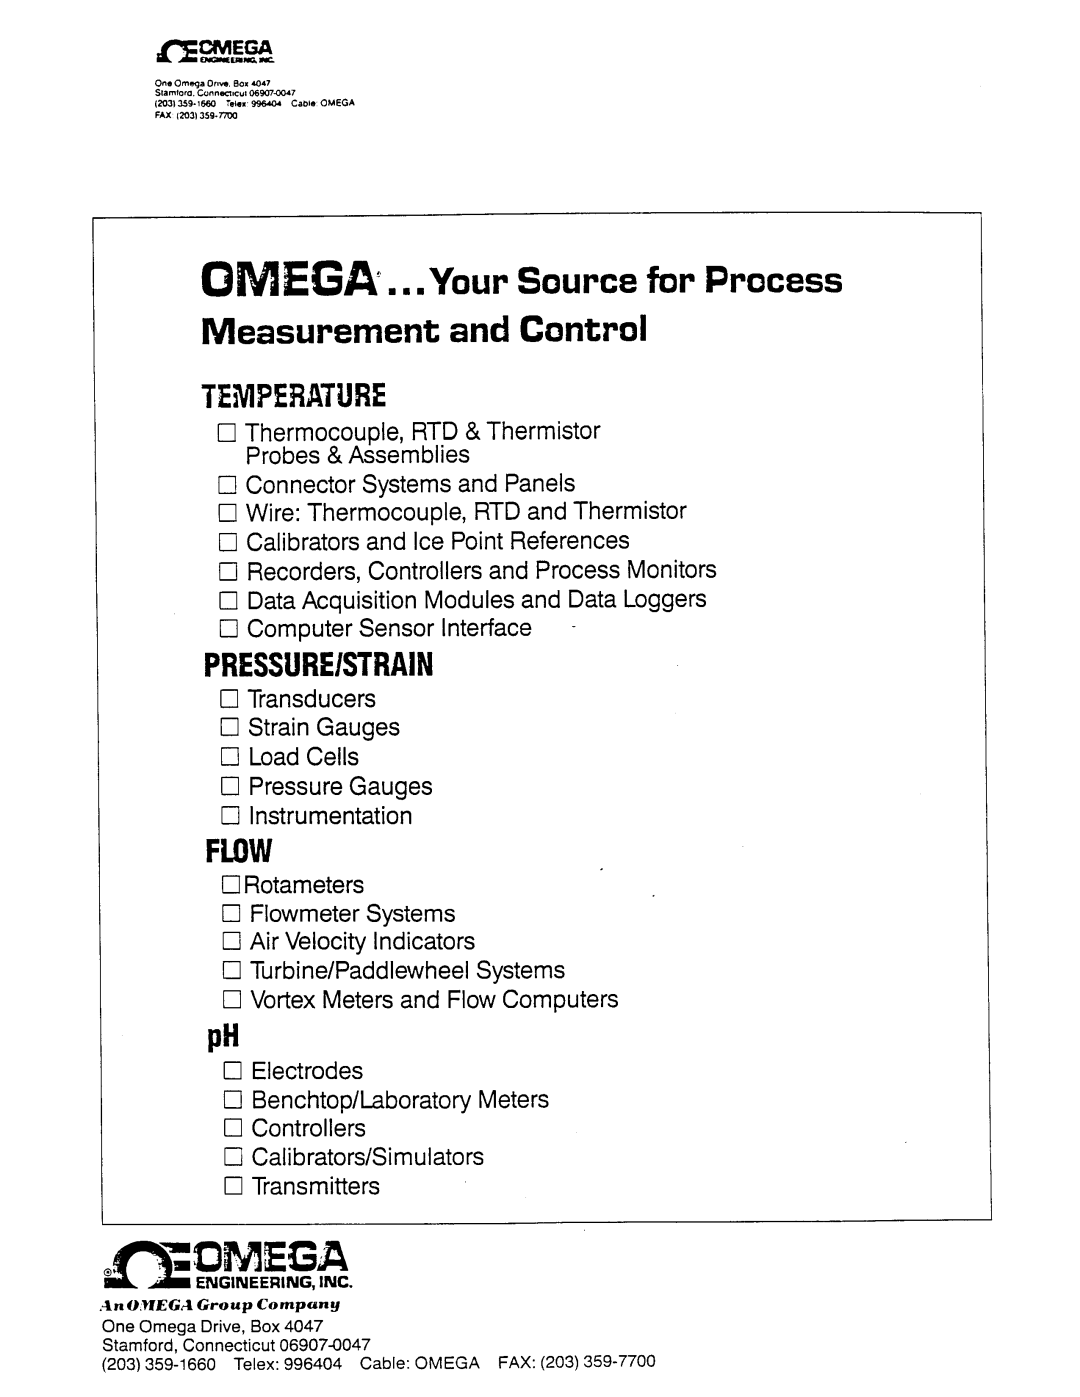 Omega Engineering PHTX-11 manual TEMPERA7UWE, PRESSURElSTRAlN, Flow 